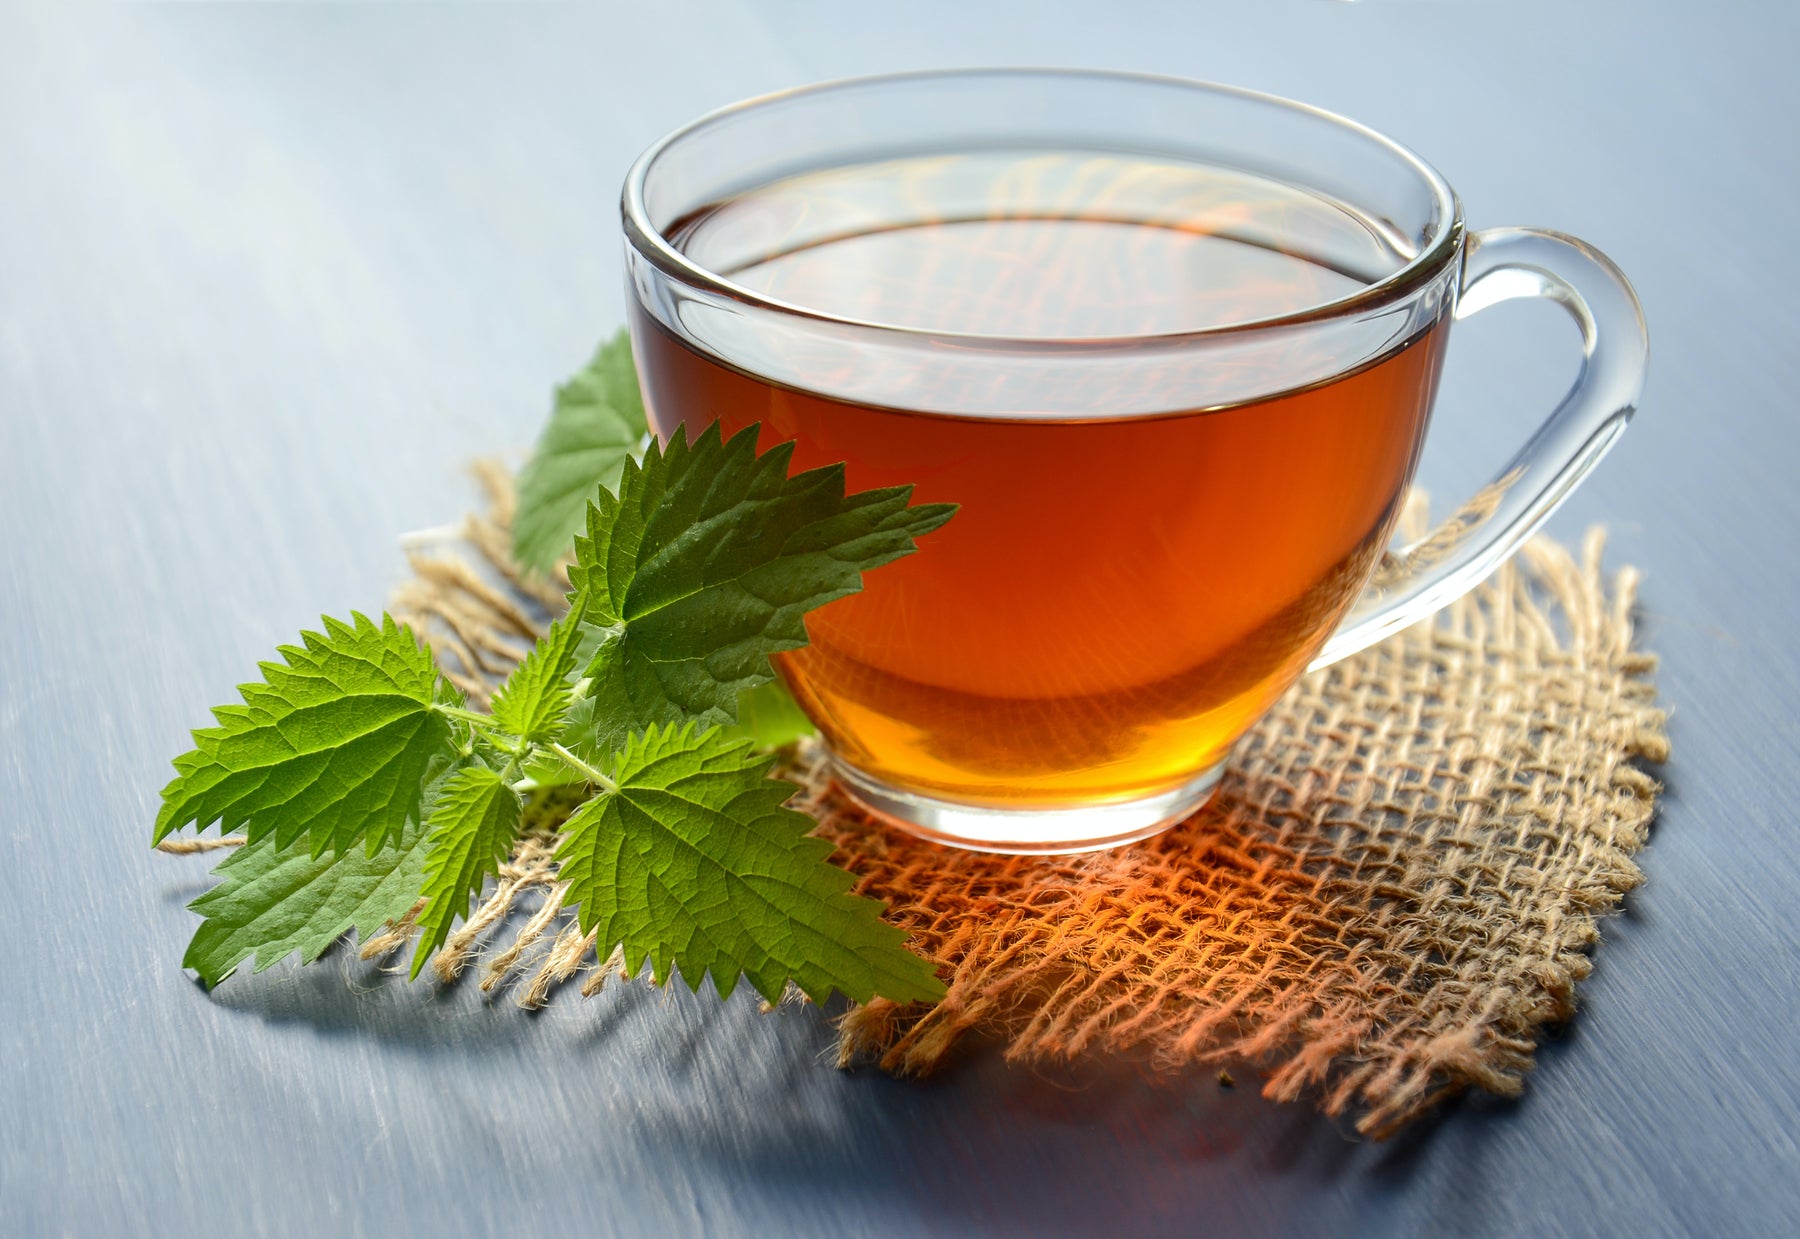 Green Tea - Benefits of Green Tea for <br>Health, Skin & Weight Loss